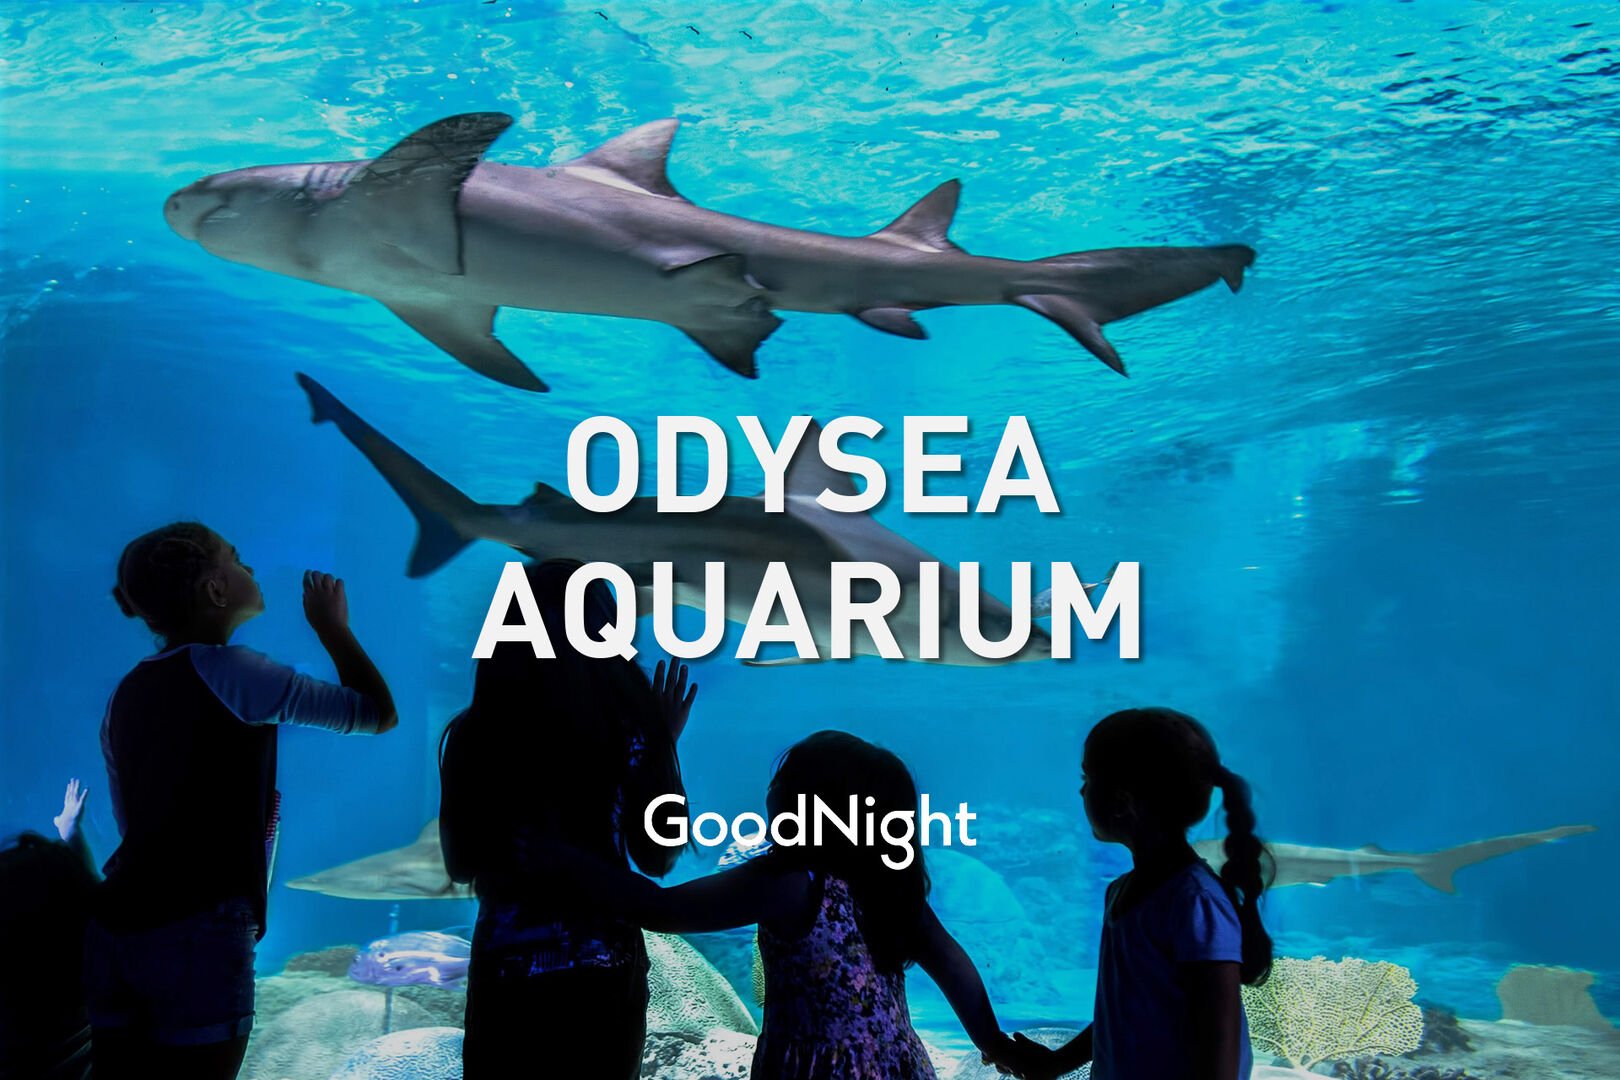 13 mins: Odysea Aquarium